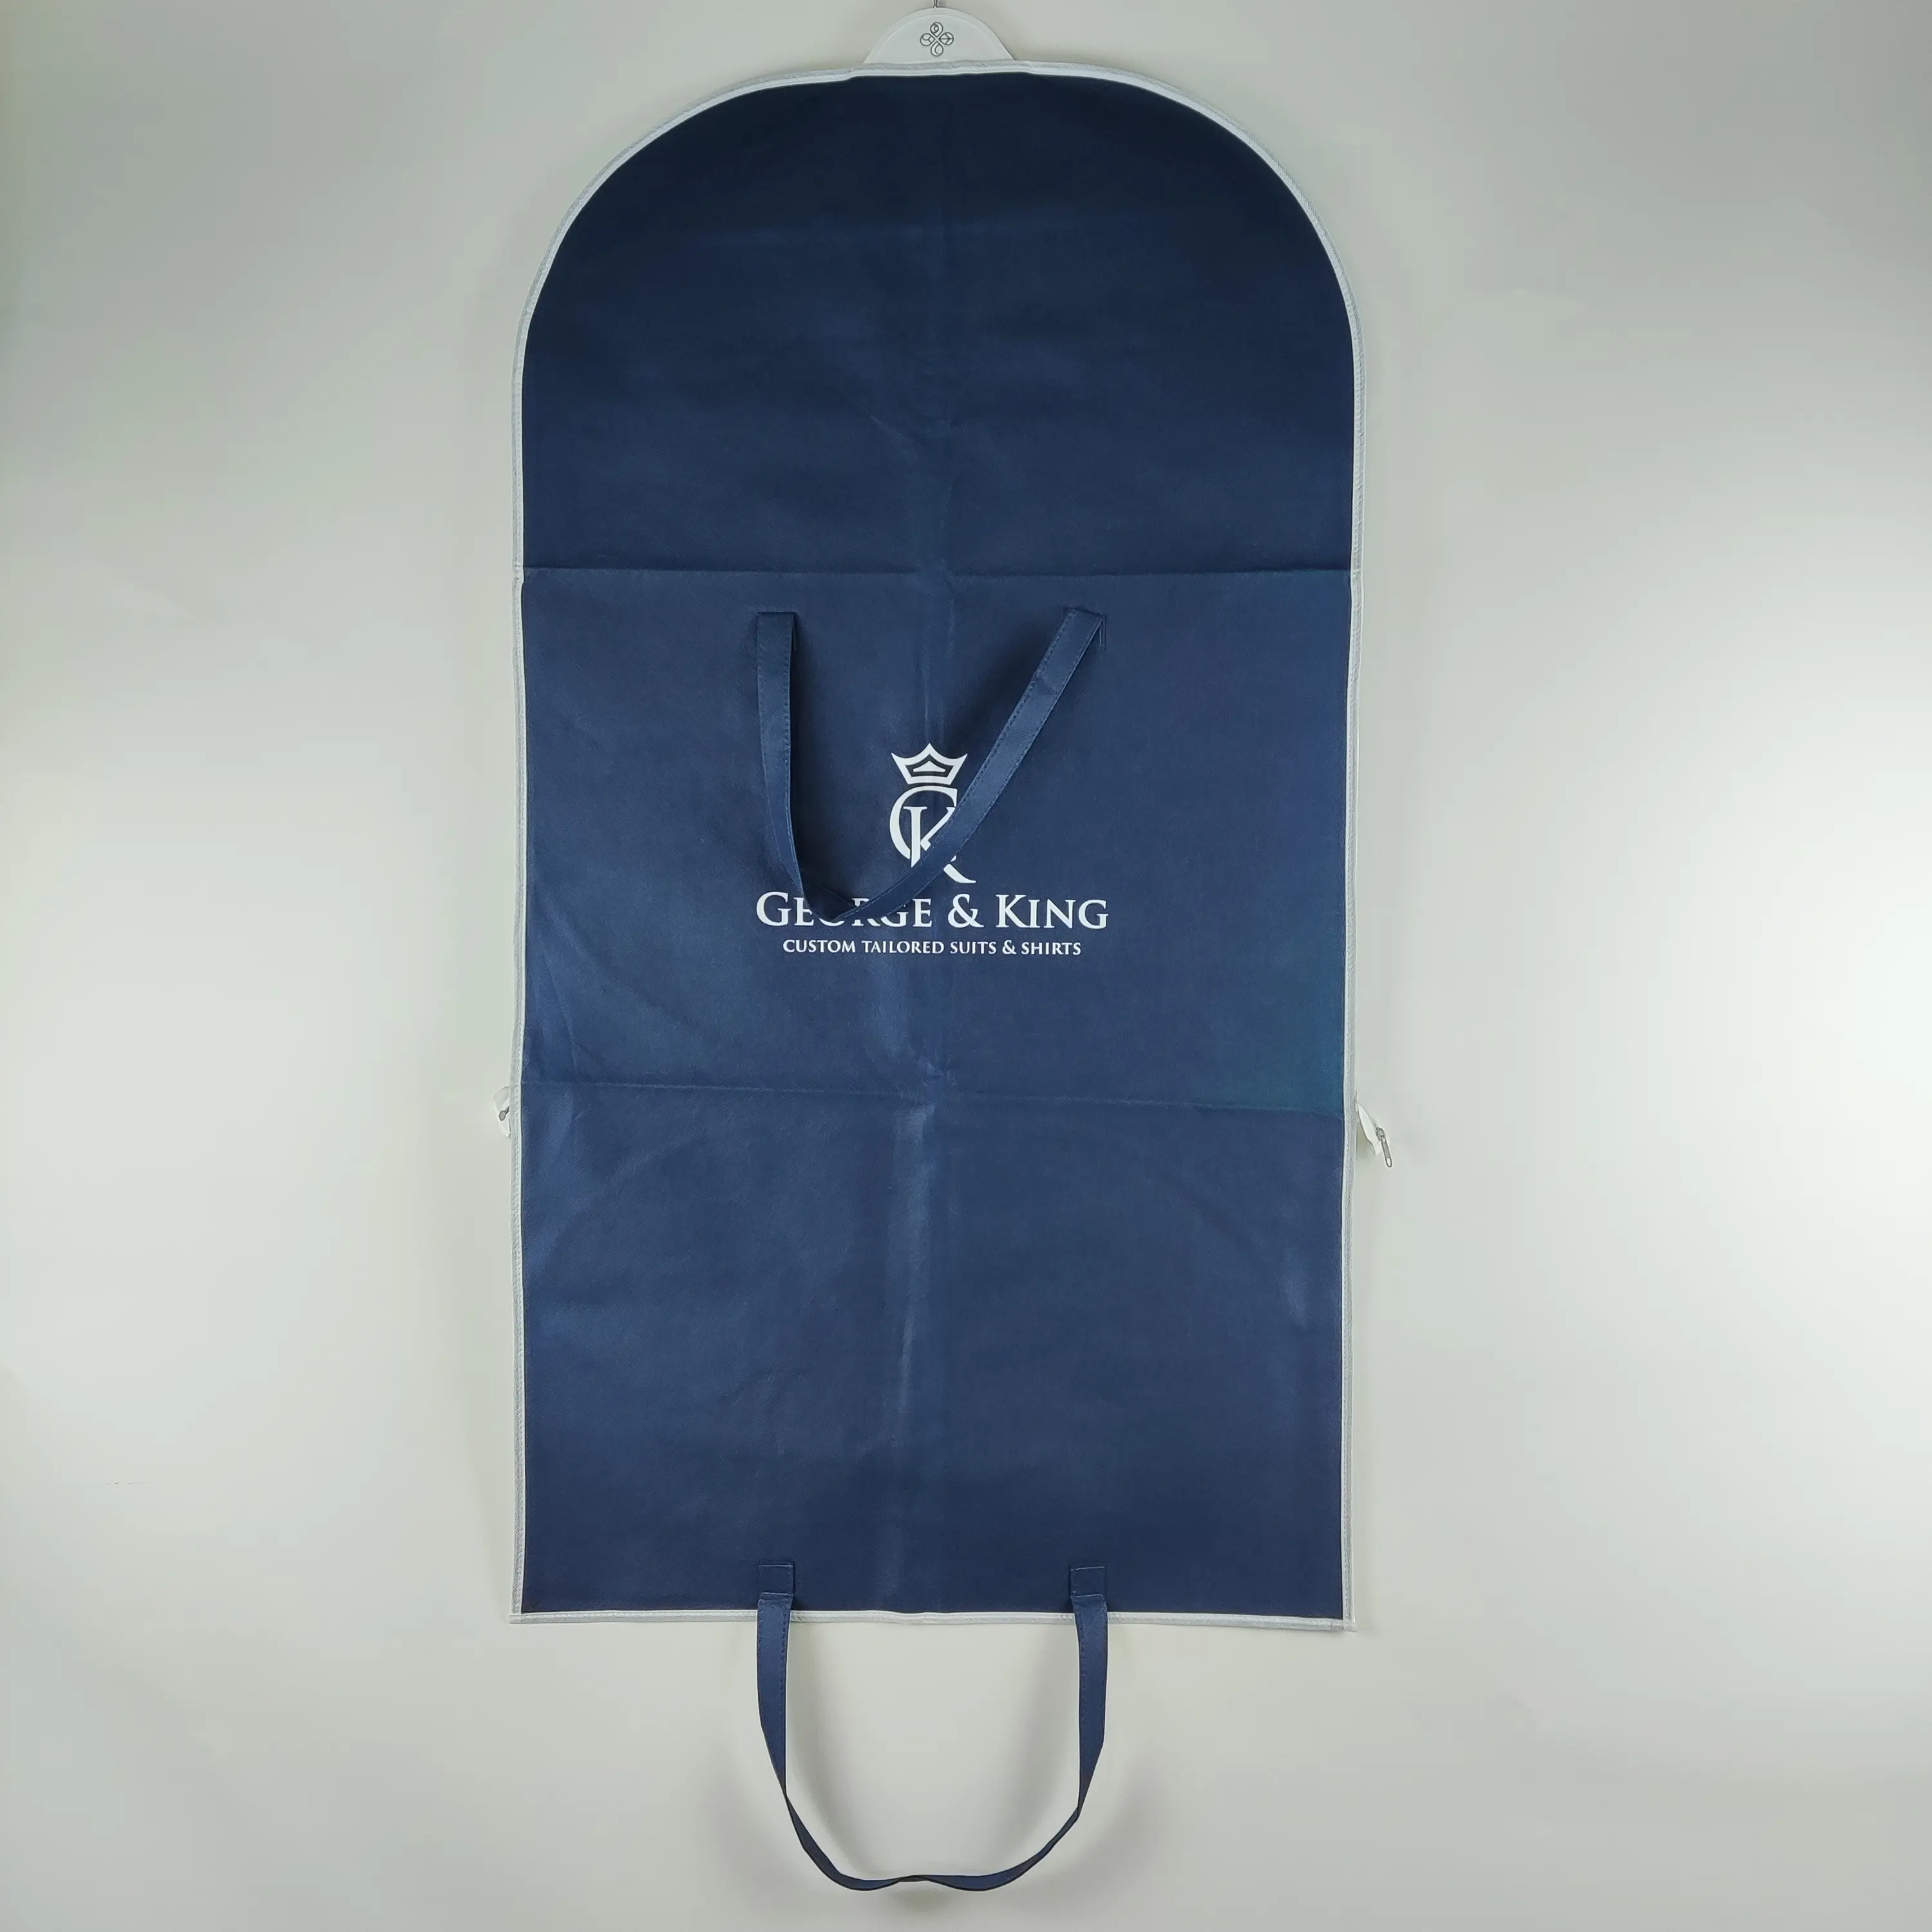 Hanging Garment Bags With Zipper For Closet Storage Garment Dust Bag For Wedding Gown Blue Long Dress Clear Garment Bag